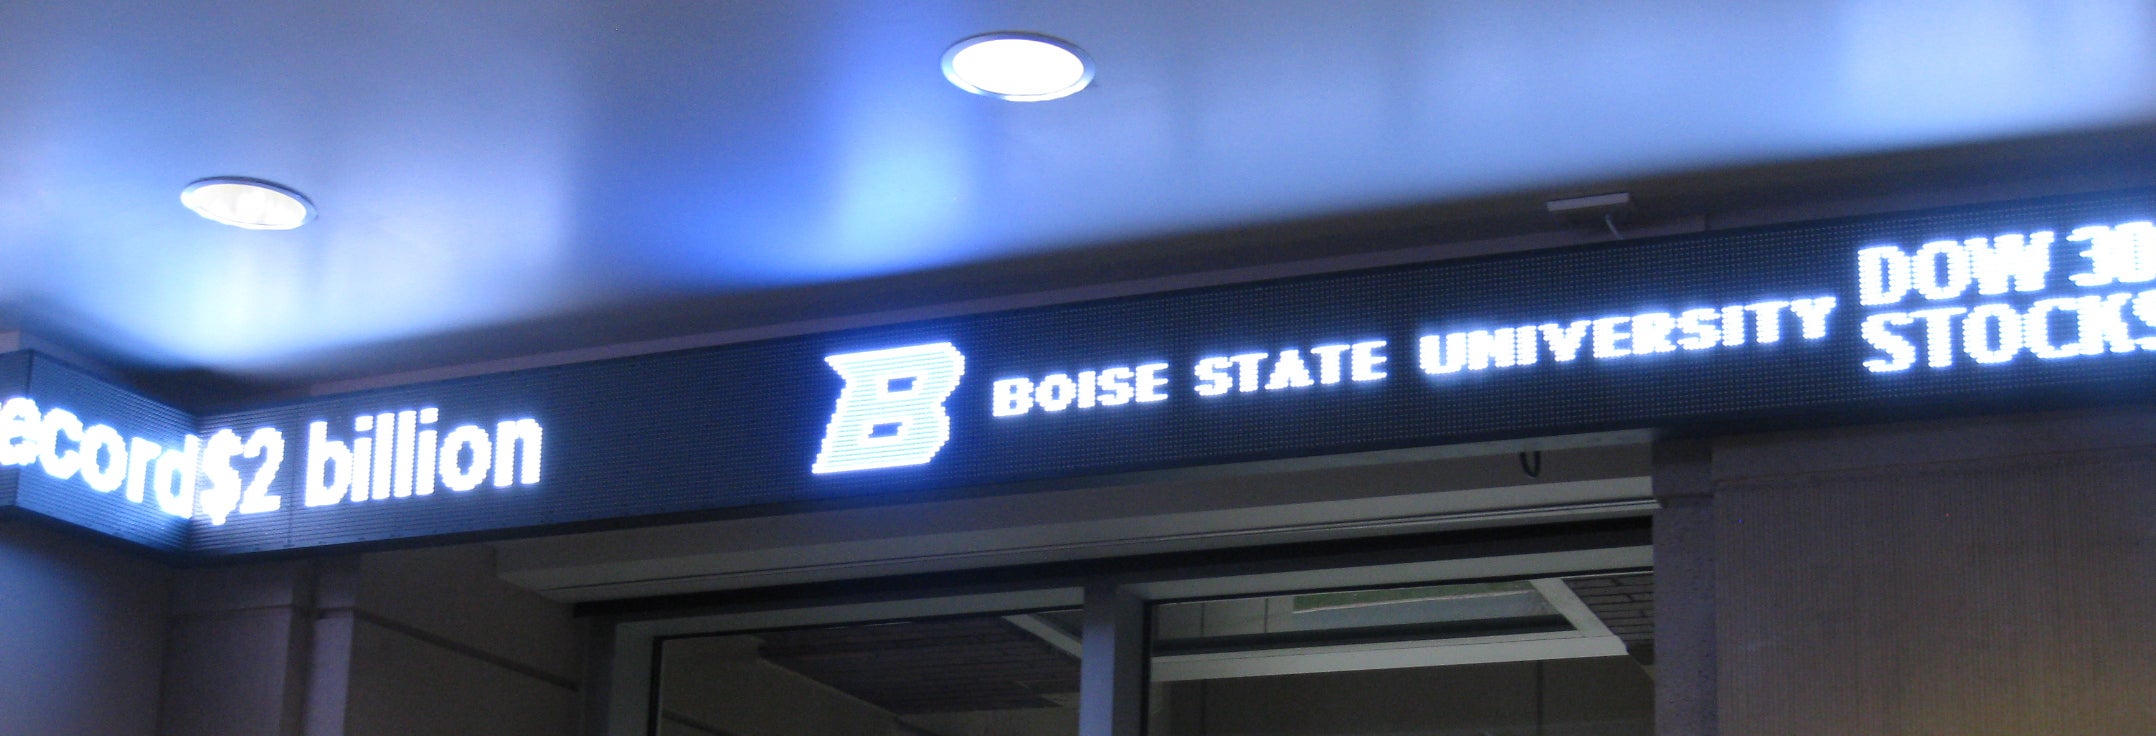 Boise State logo displayed on digital stock ticker